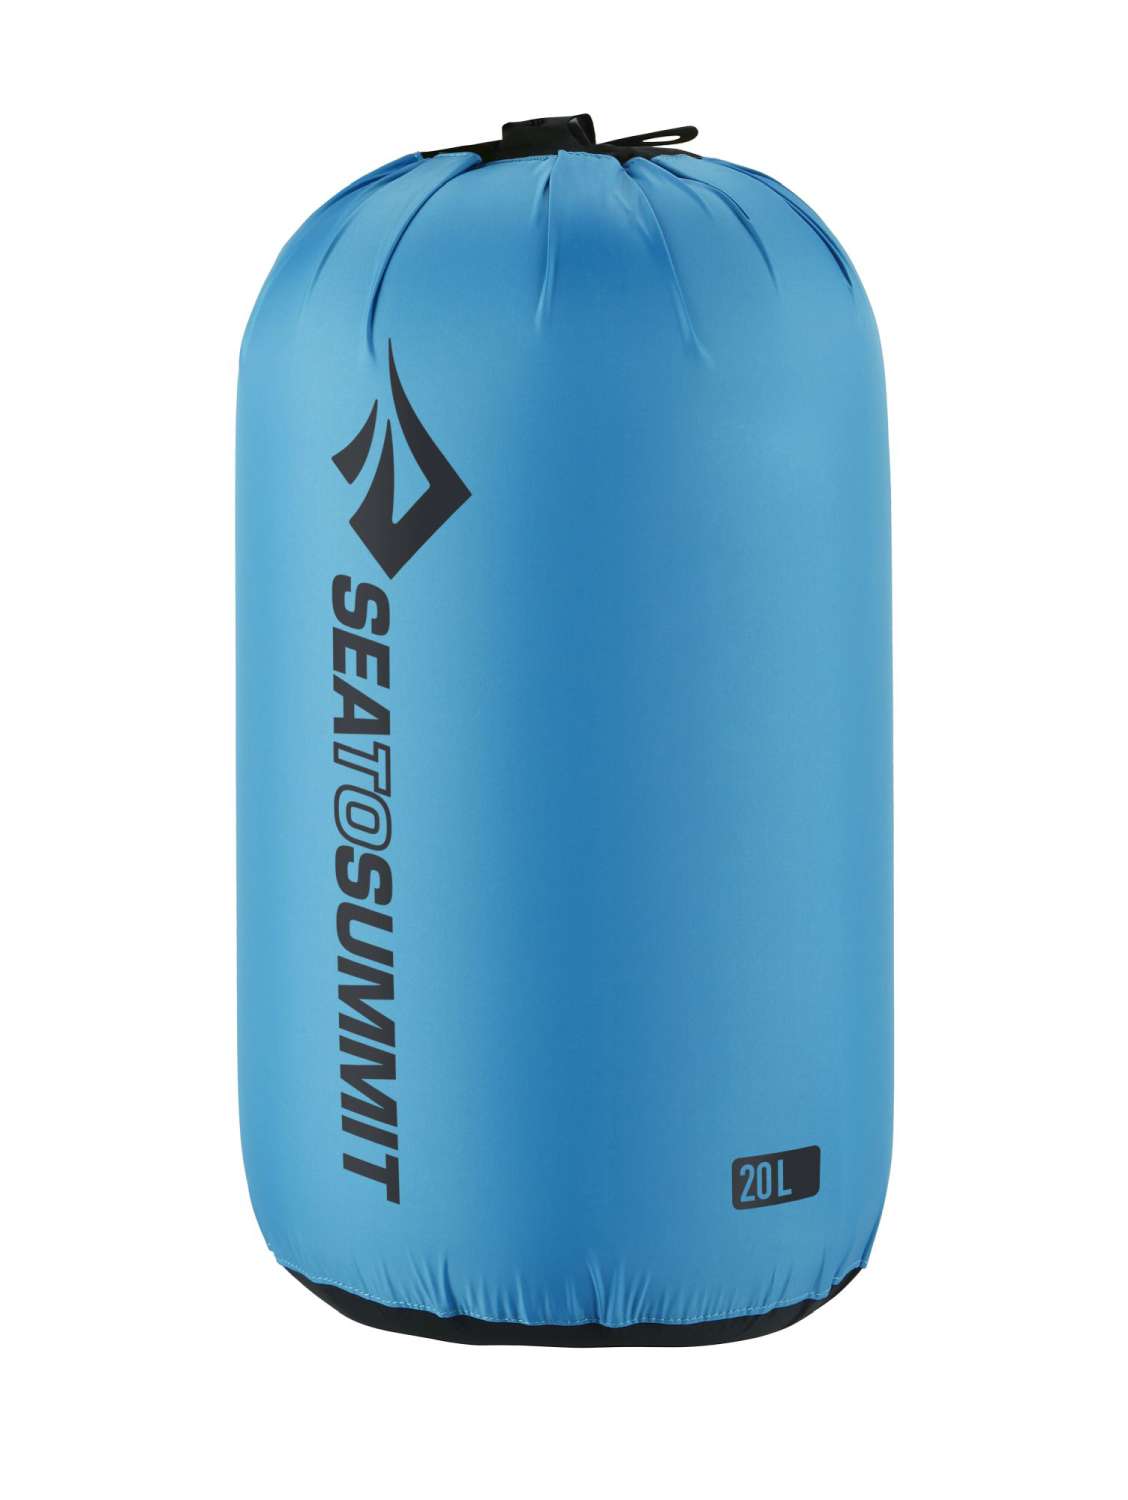 Sea to Summit Nylon Stuff Sack Packsack blau XL 20 Liter